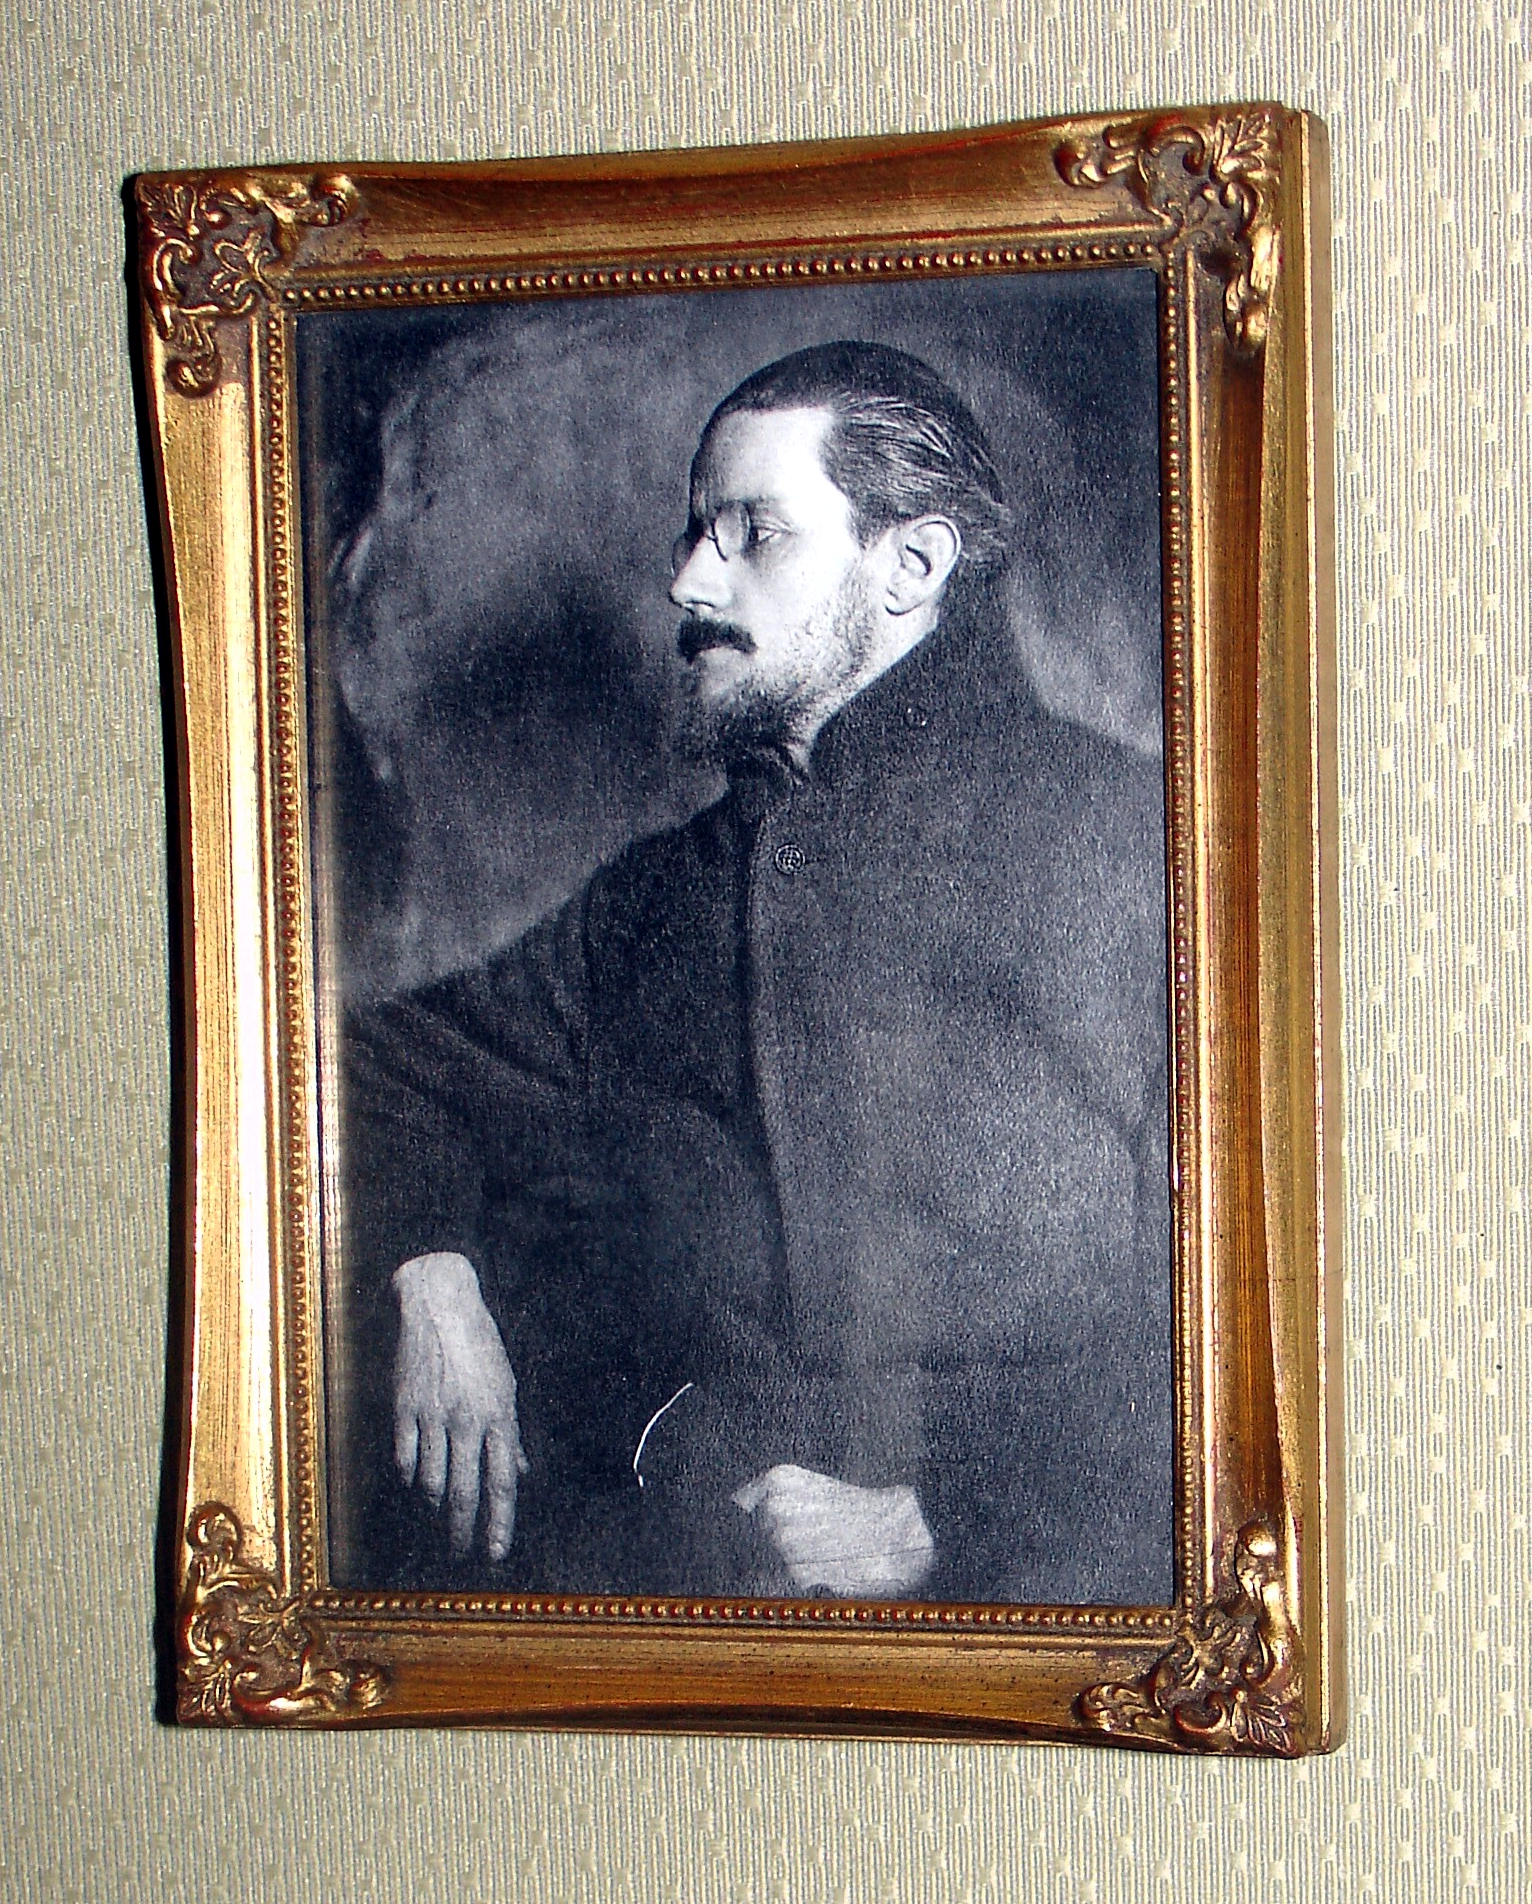 05 James Joyce Portrait Framed at Office.JPG